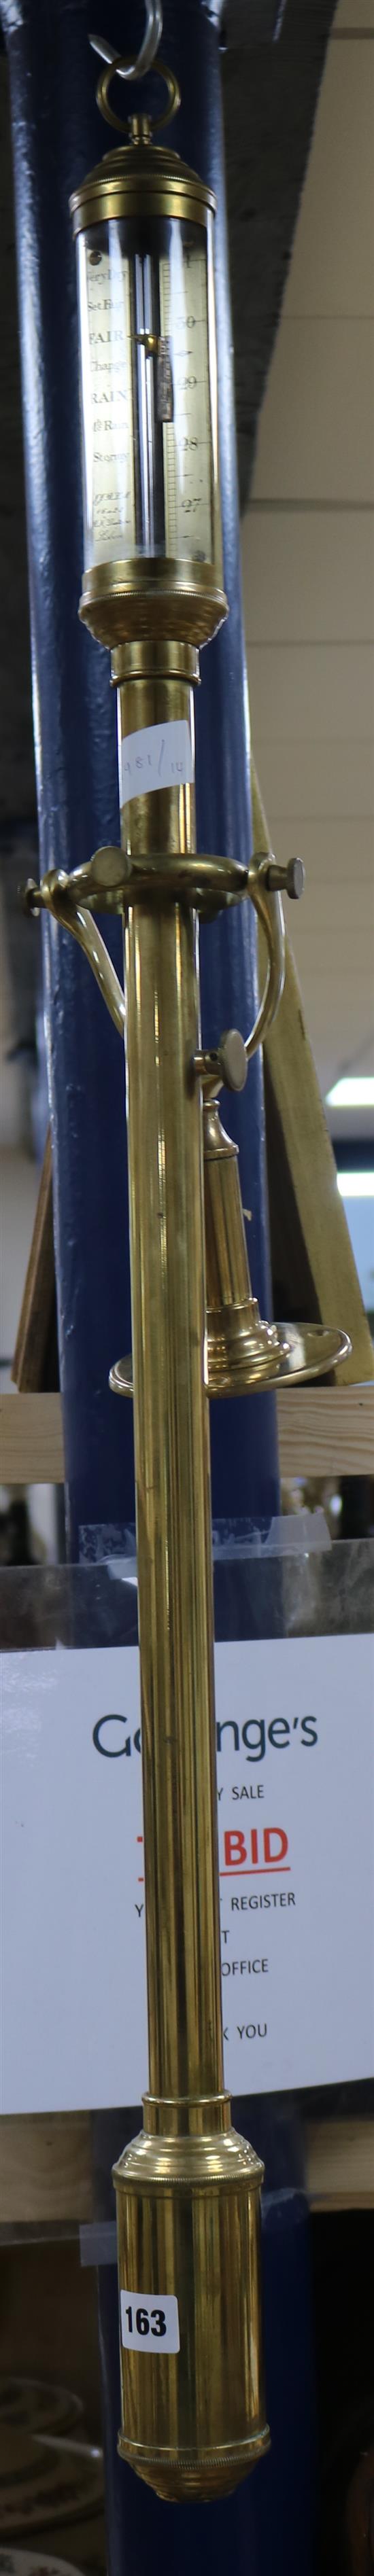 A brass marine barometer